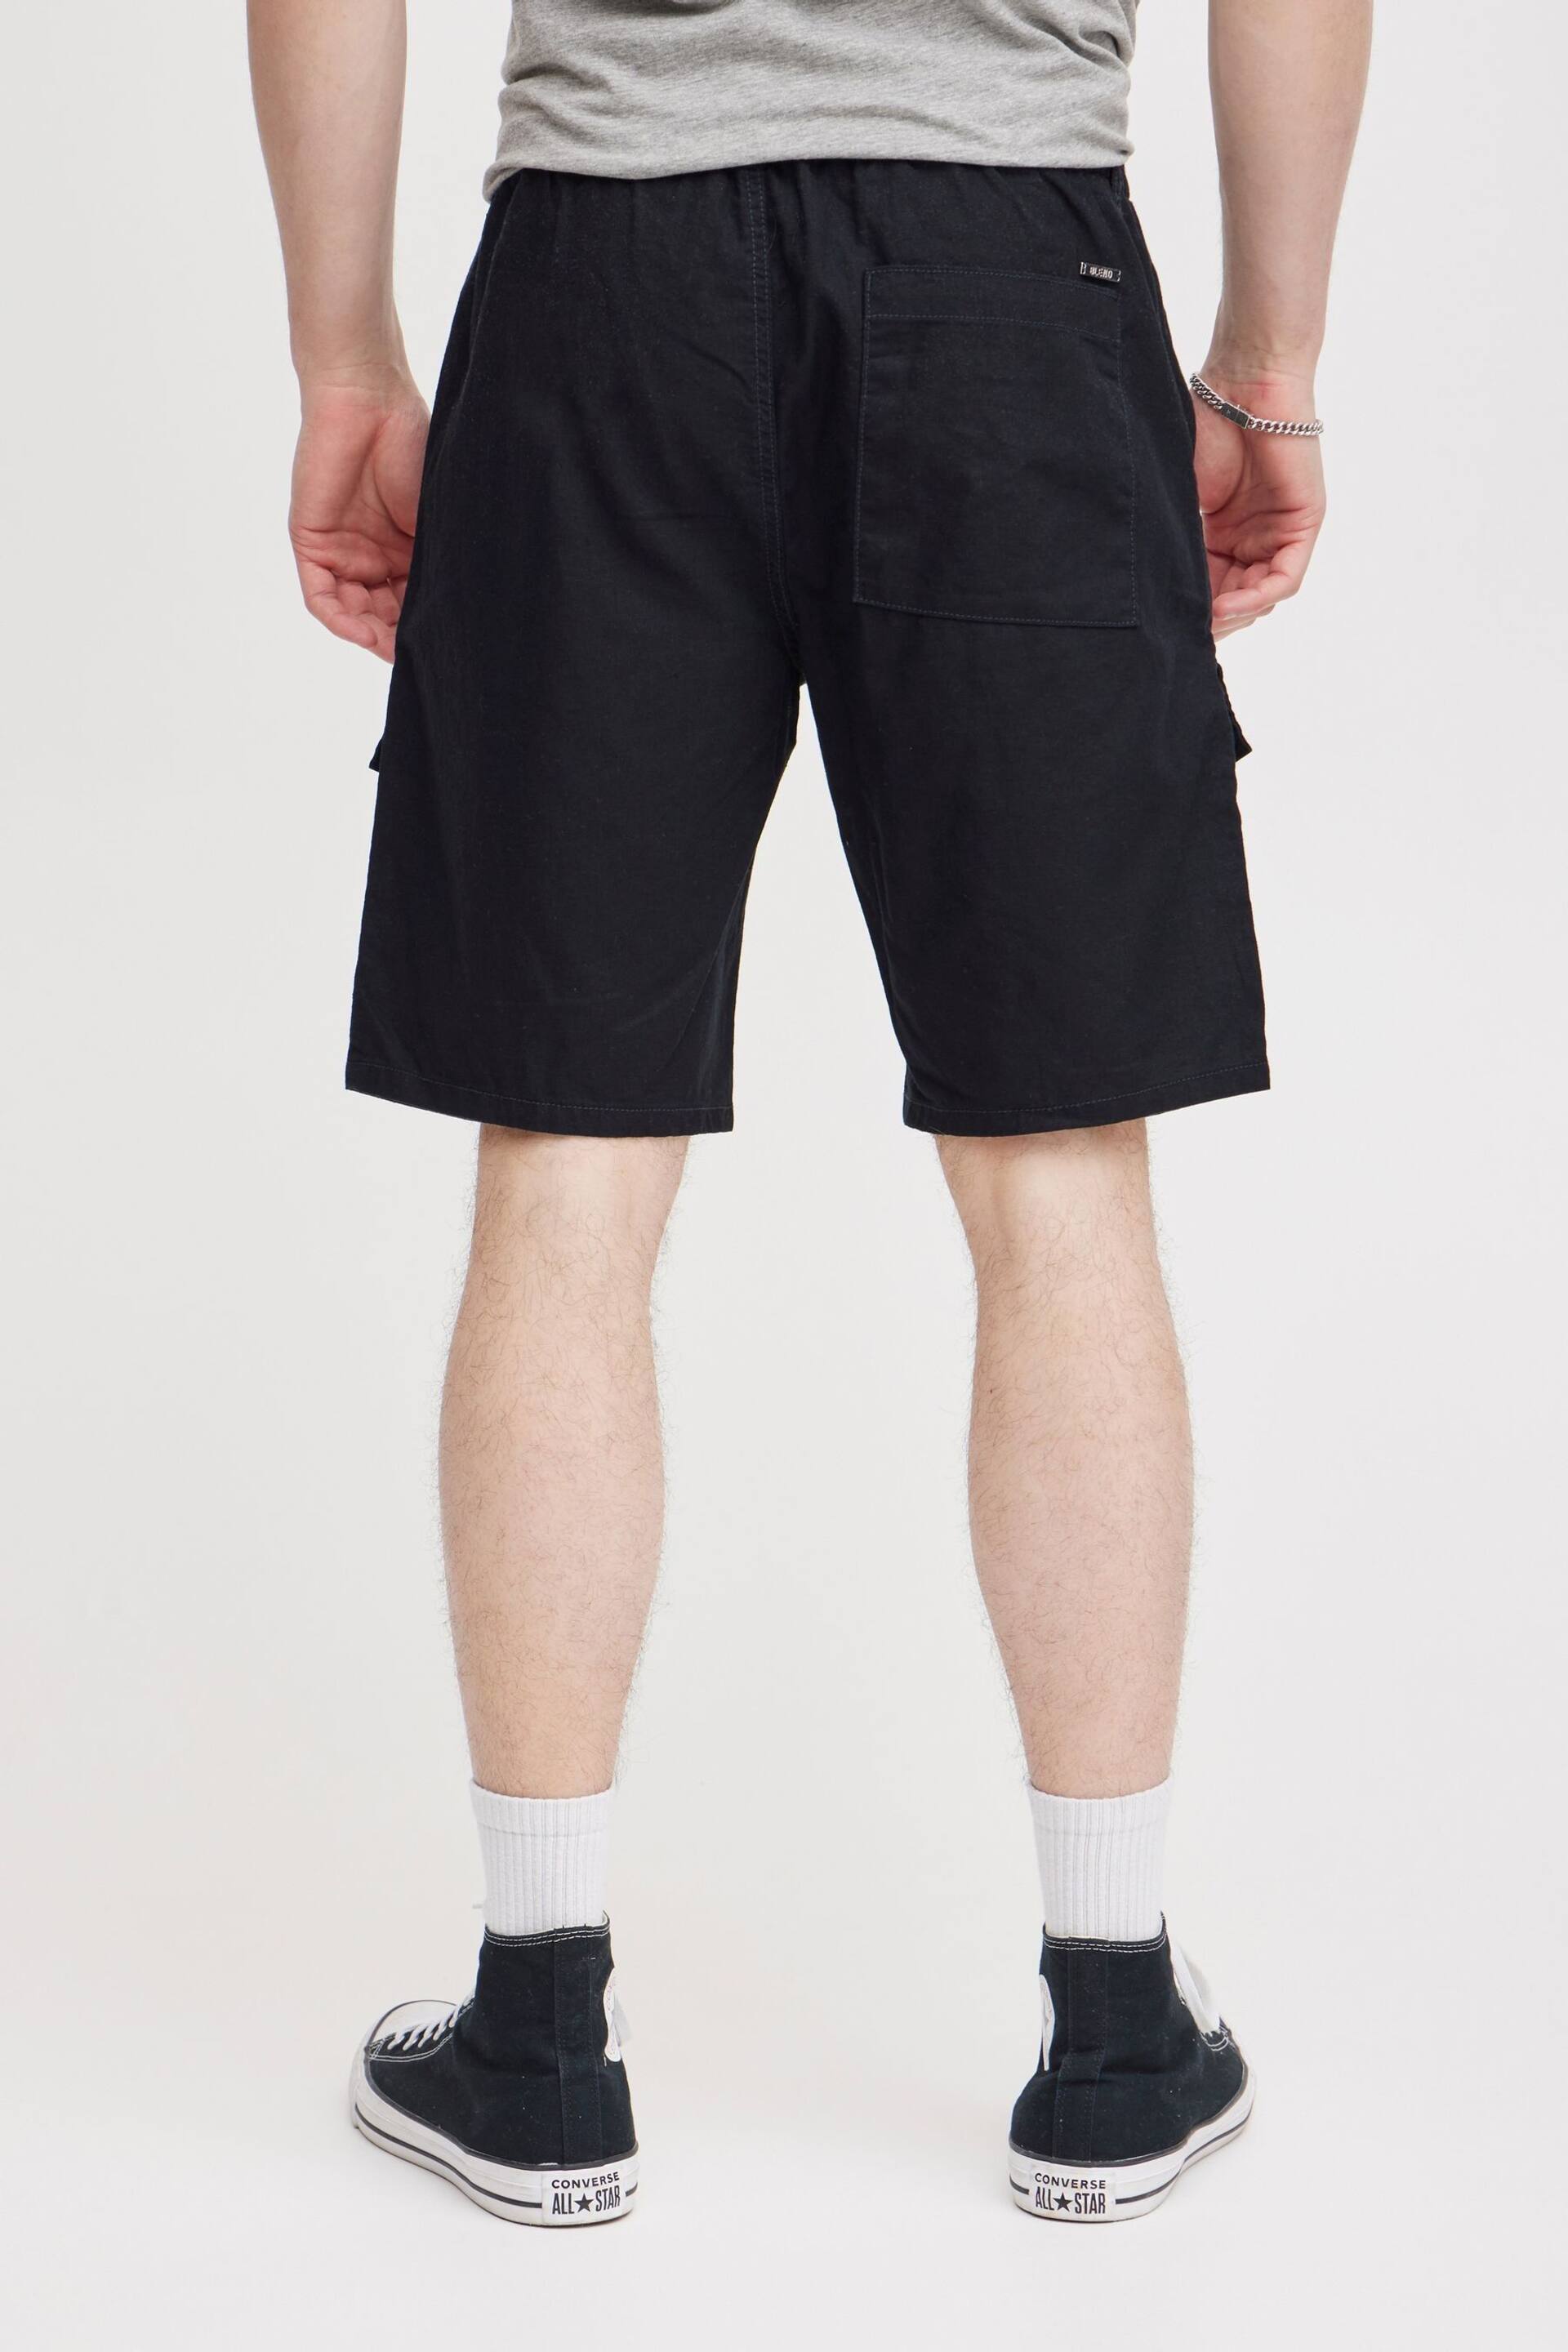 Blend Black Linen Cargo Shorts - Image 2 of 5